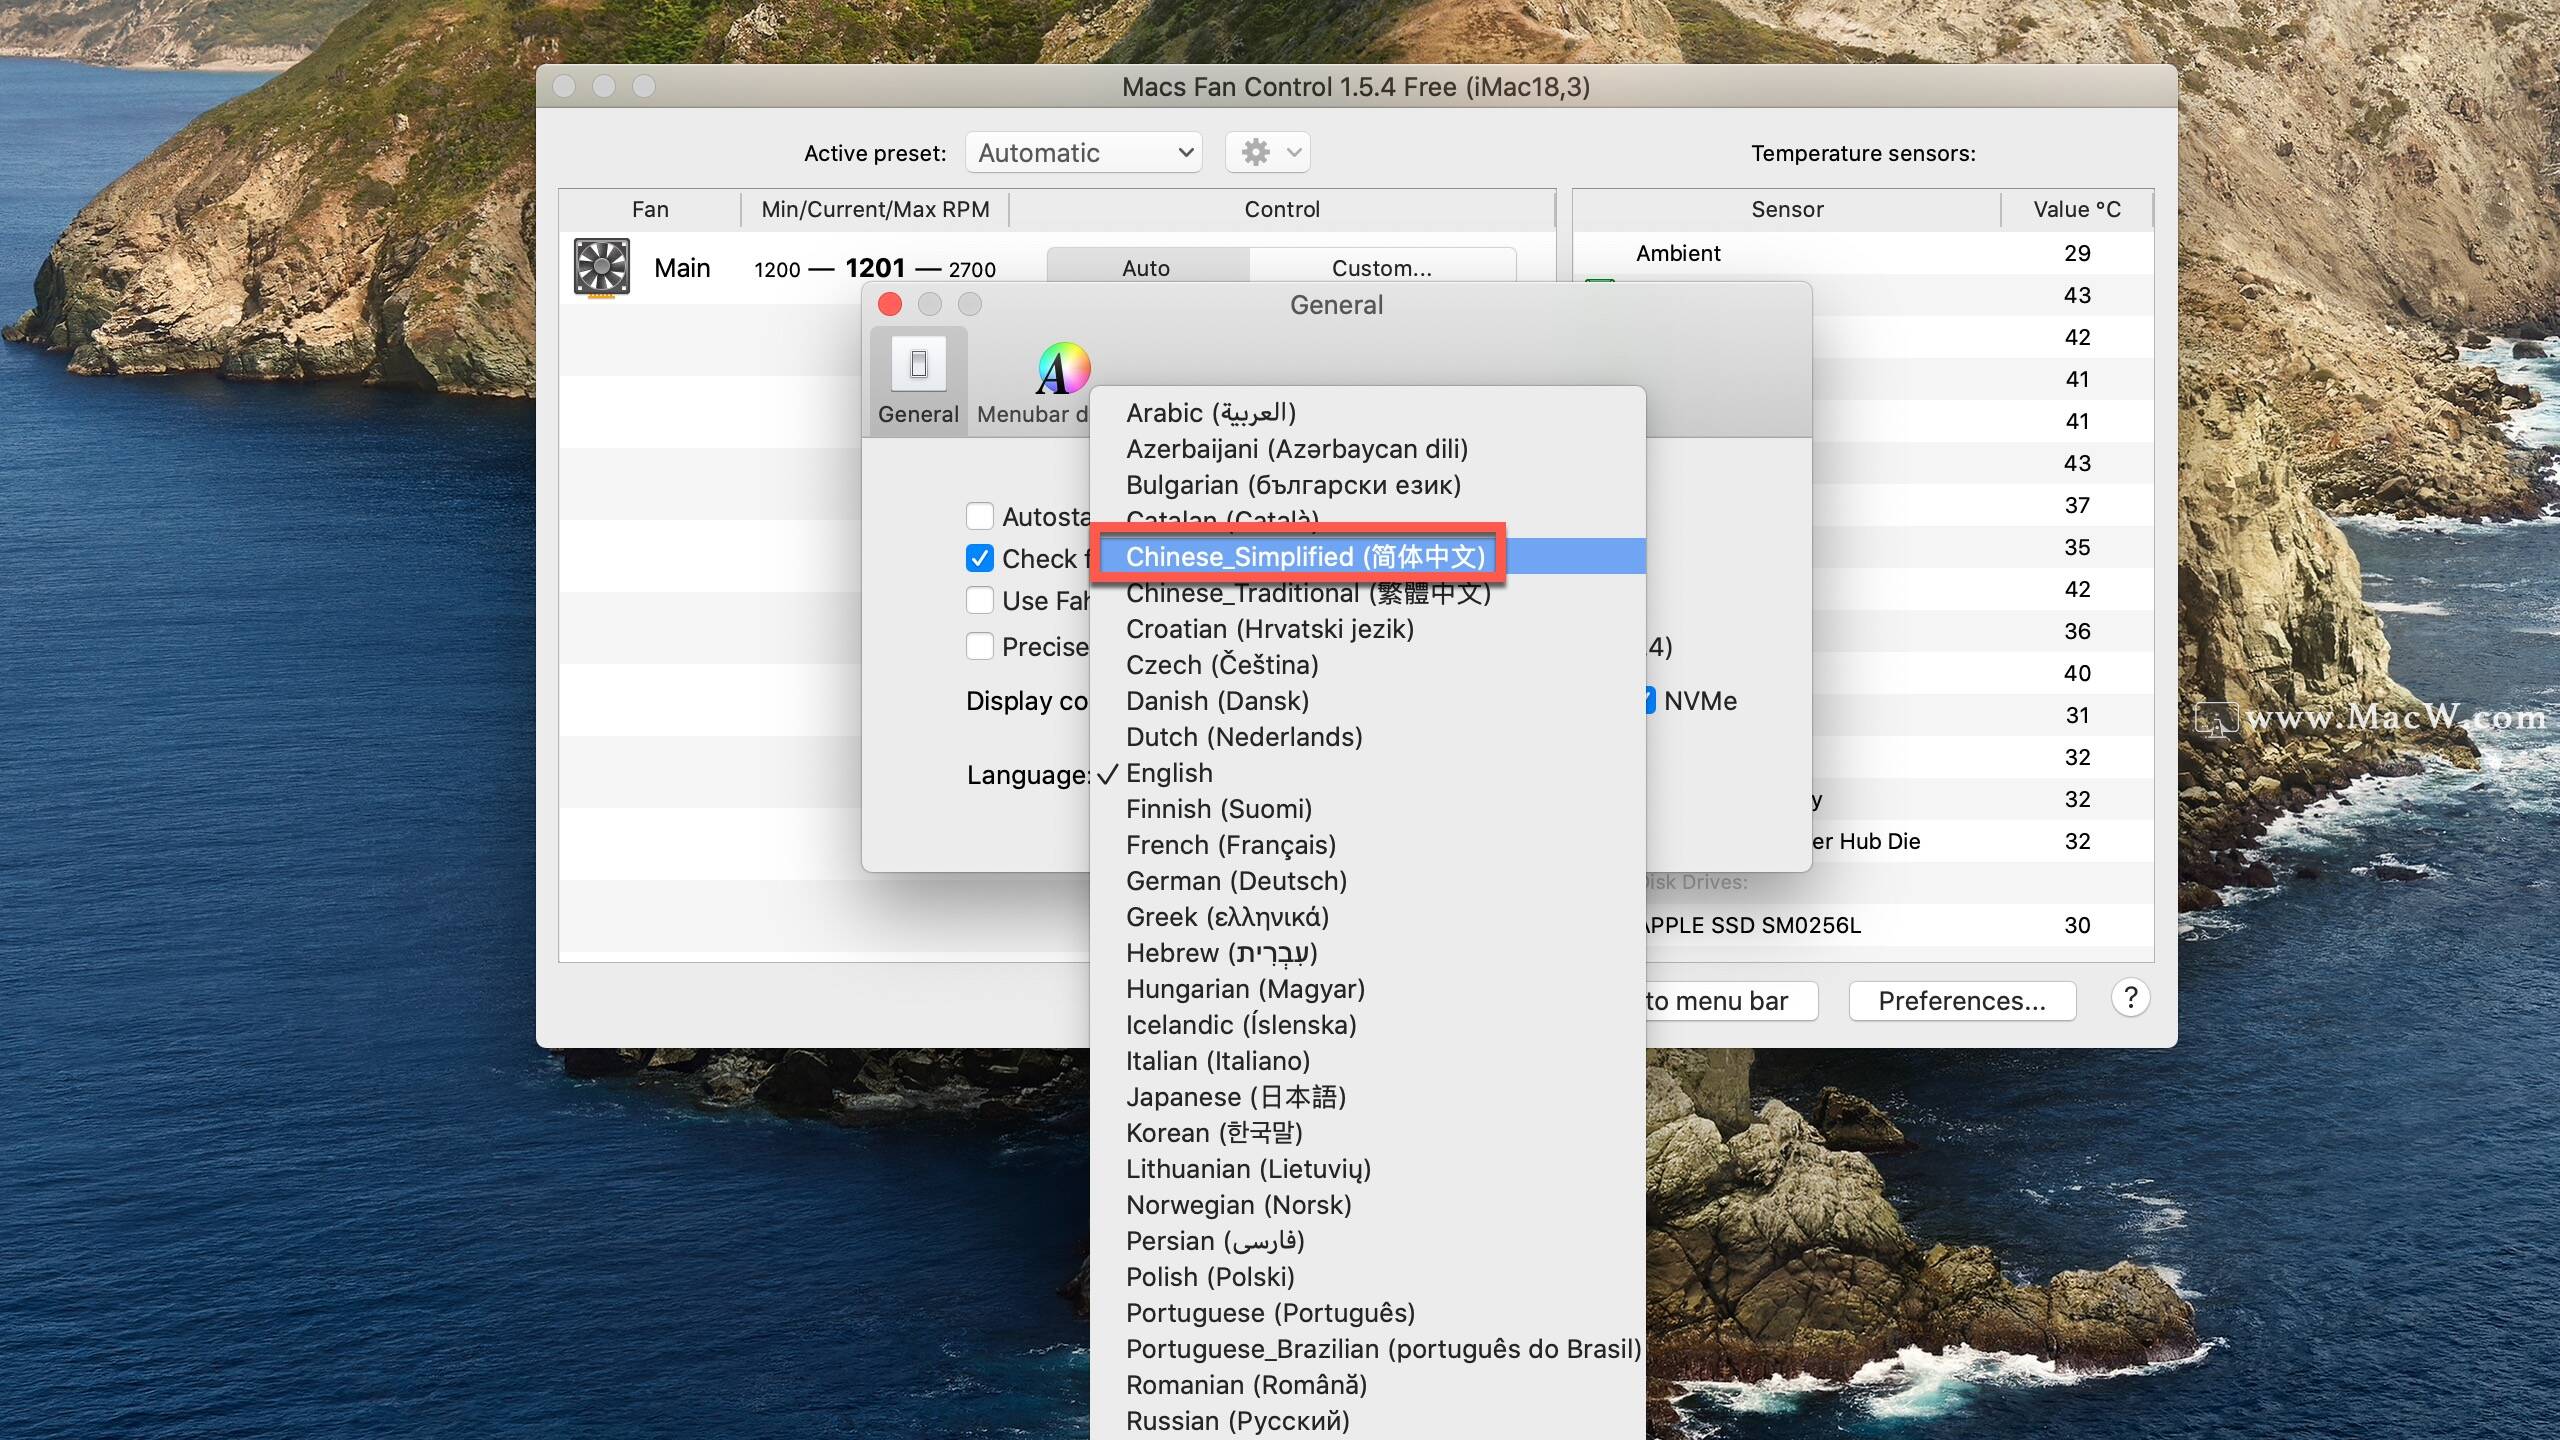 macs fan control pro license key free